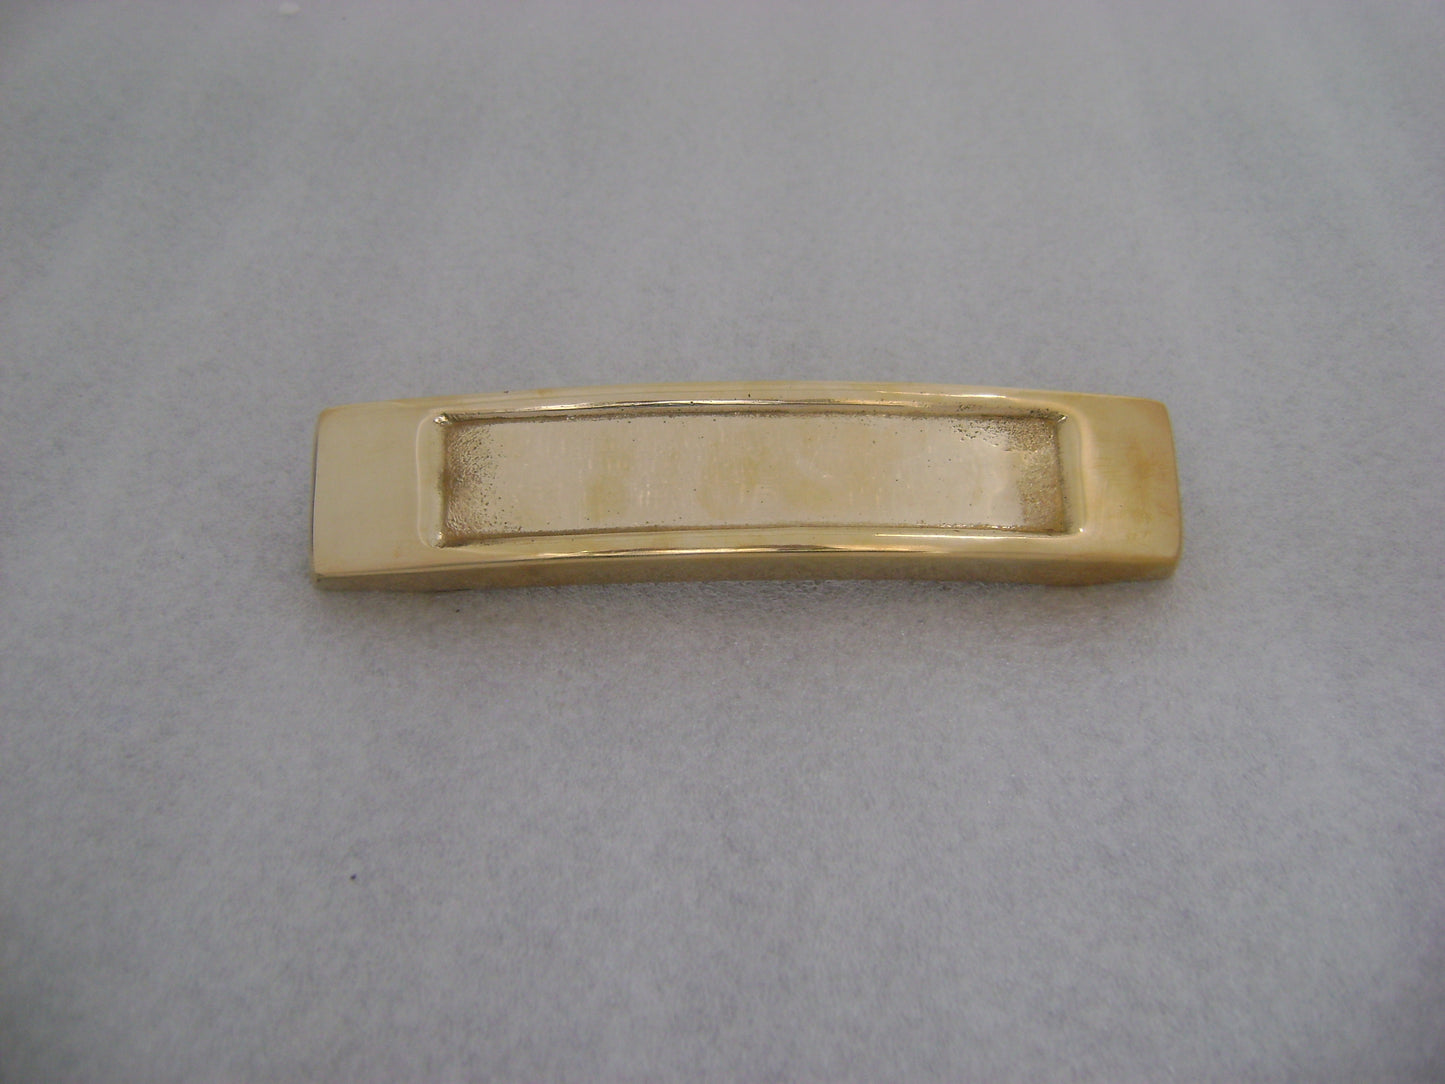 Brass number plate for old model royal enfield electra & standard